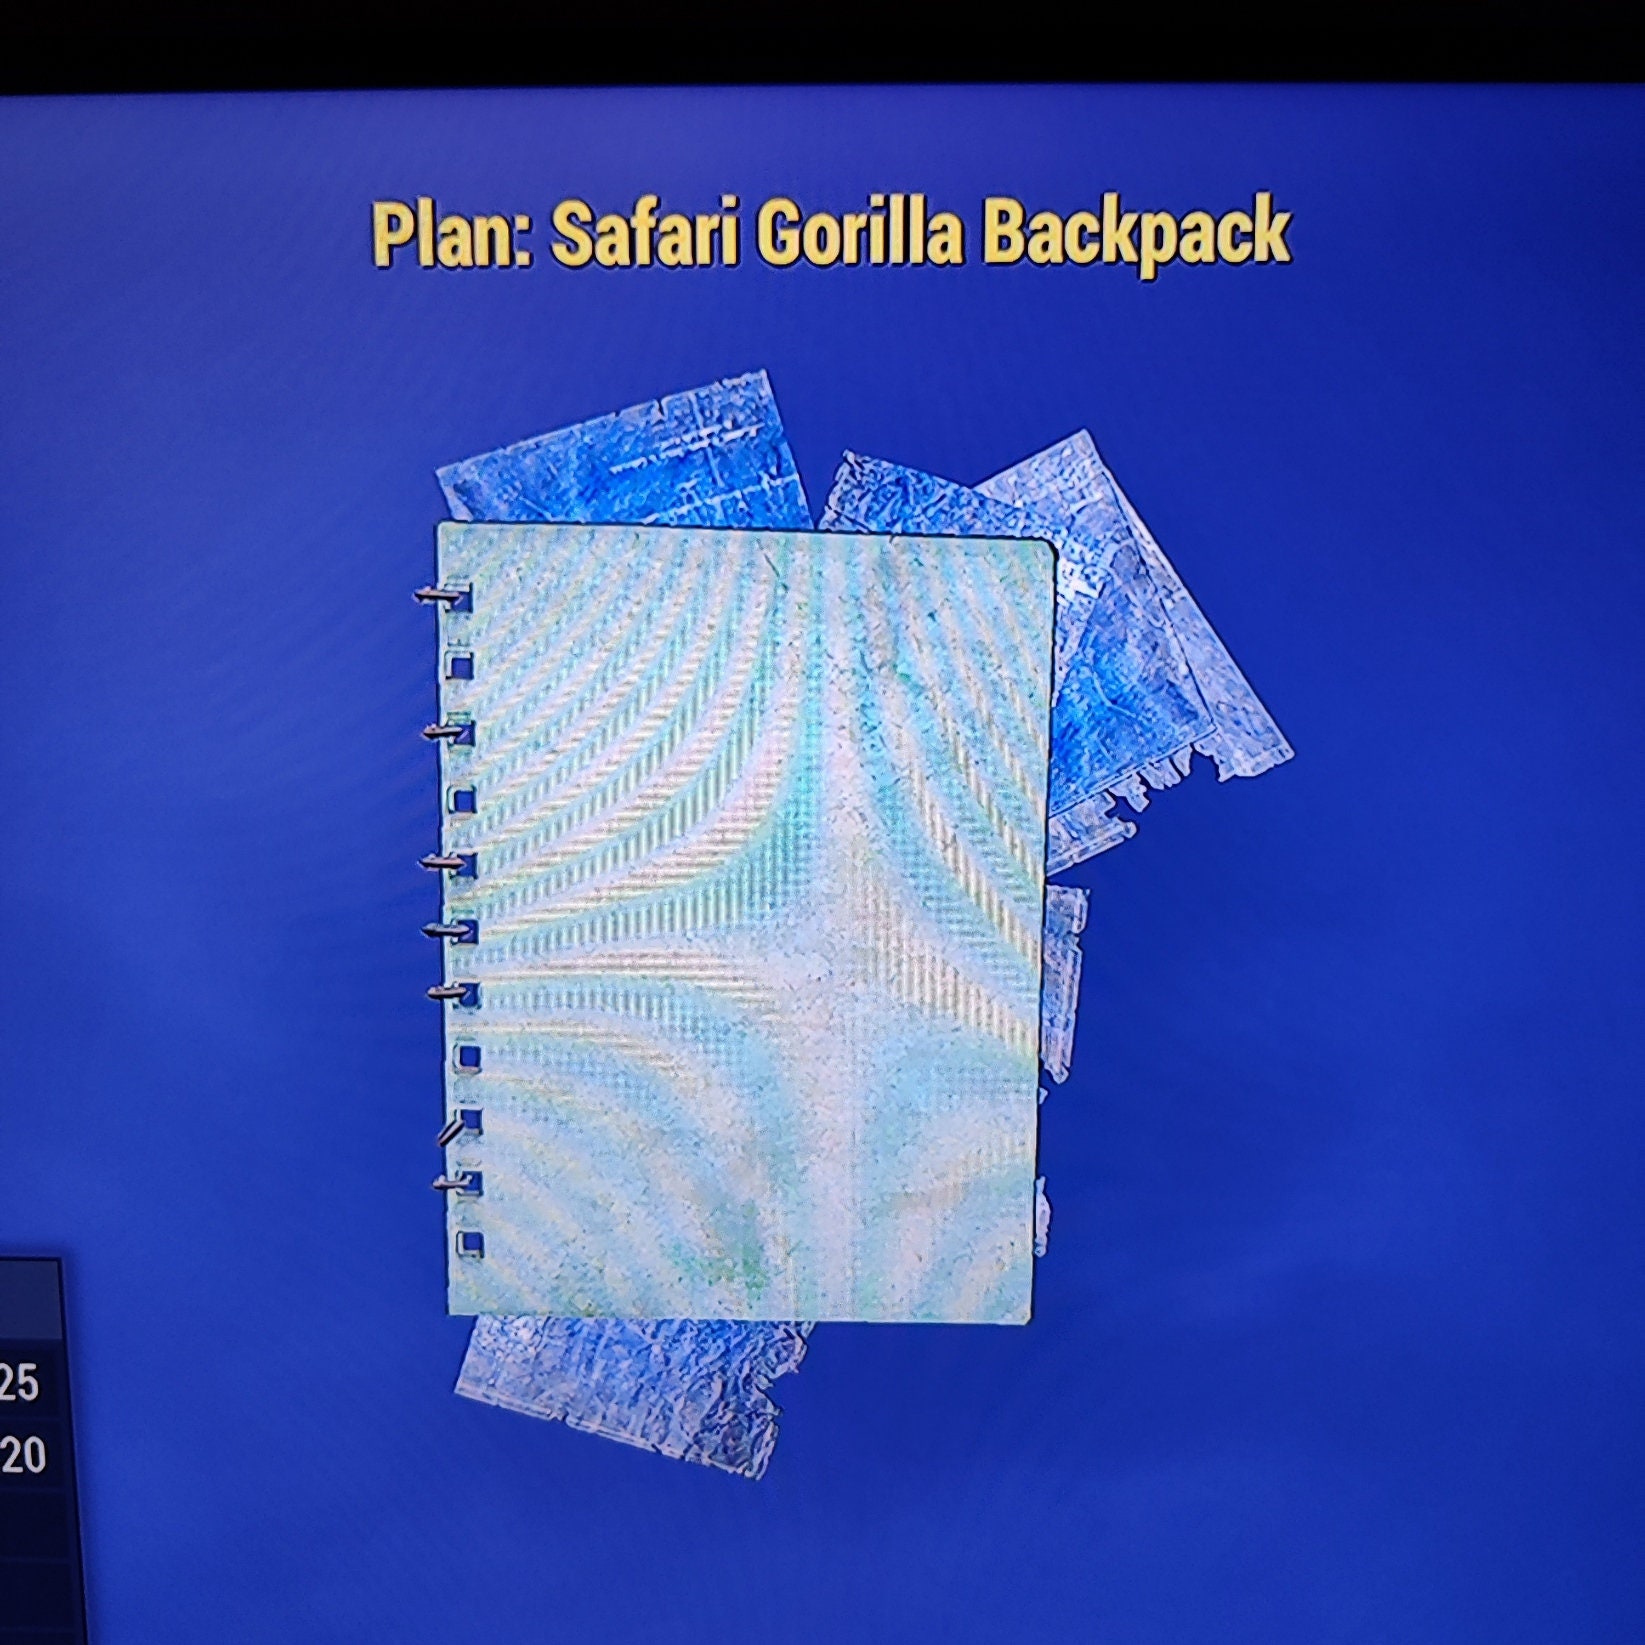 gorilla safari backpack fallout 76